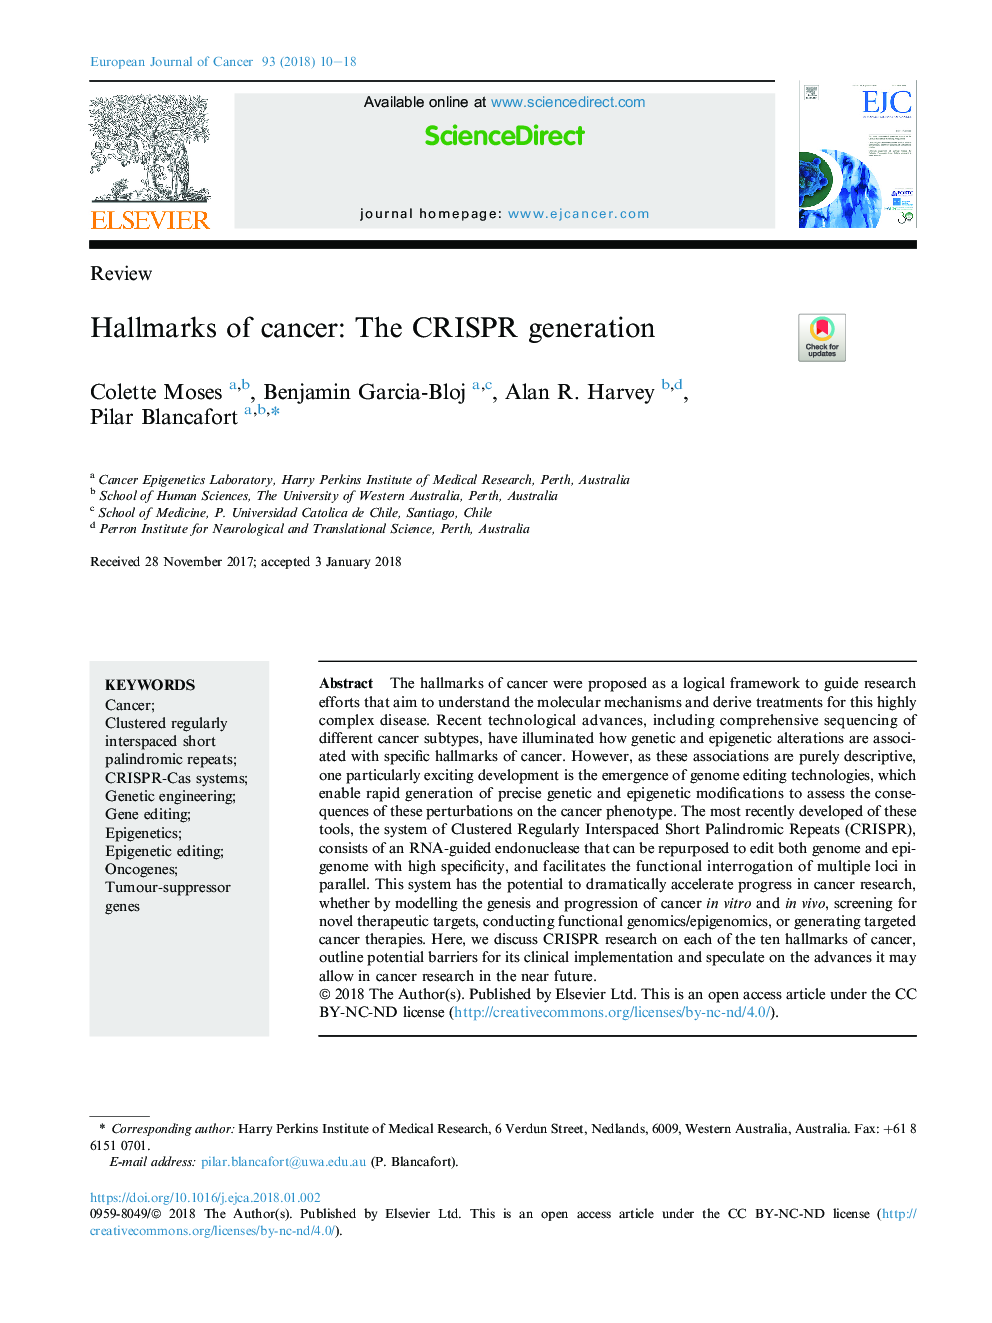 Hallmarks of cancer: The CRISPR generation